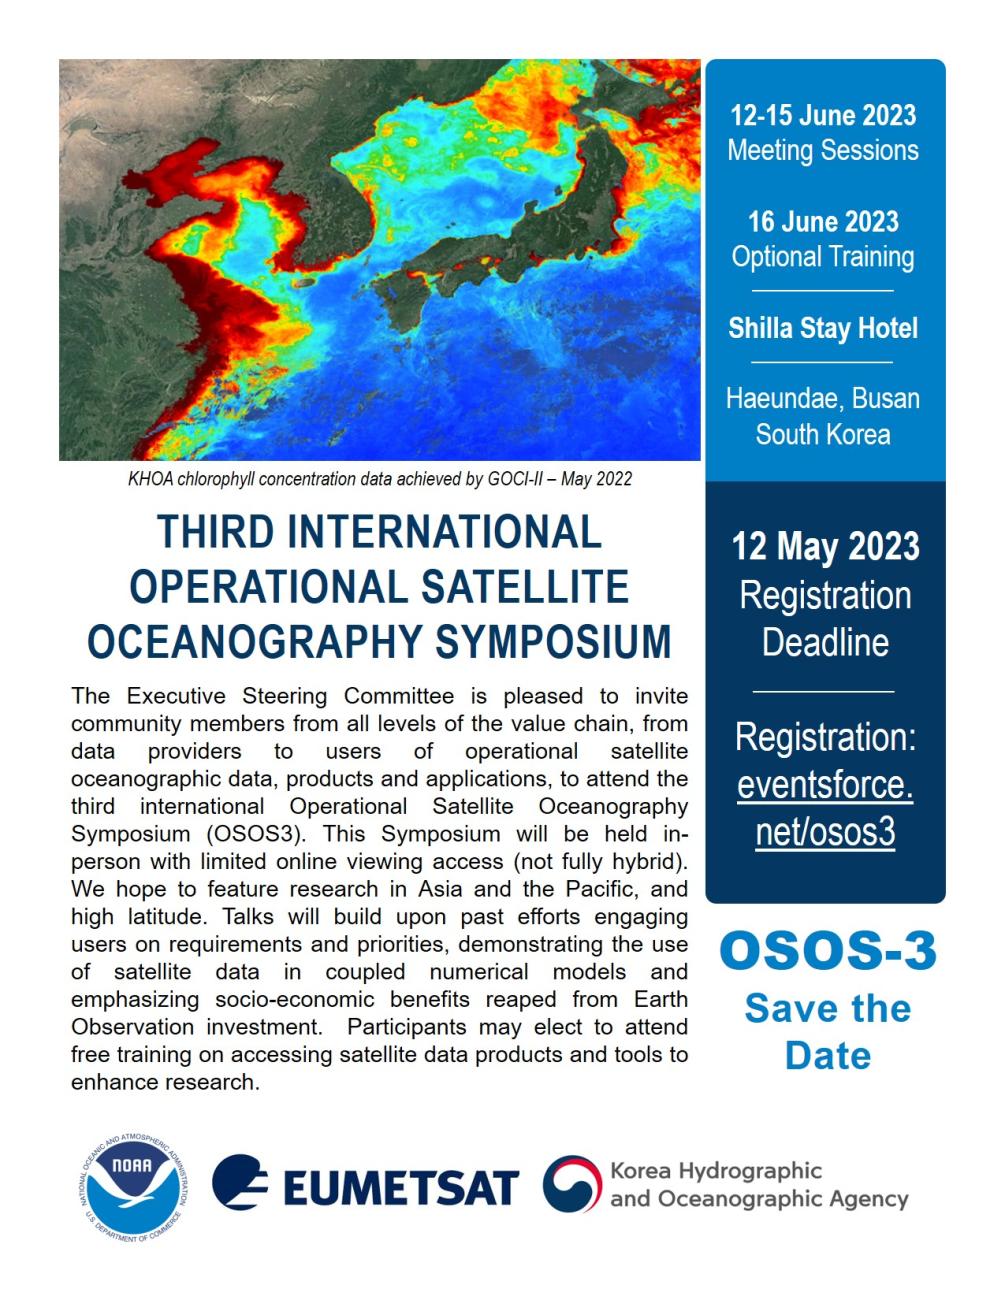 Flyer for OSOS-3, see website for details.